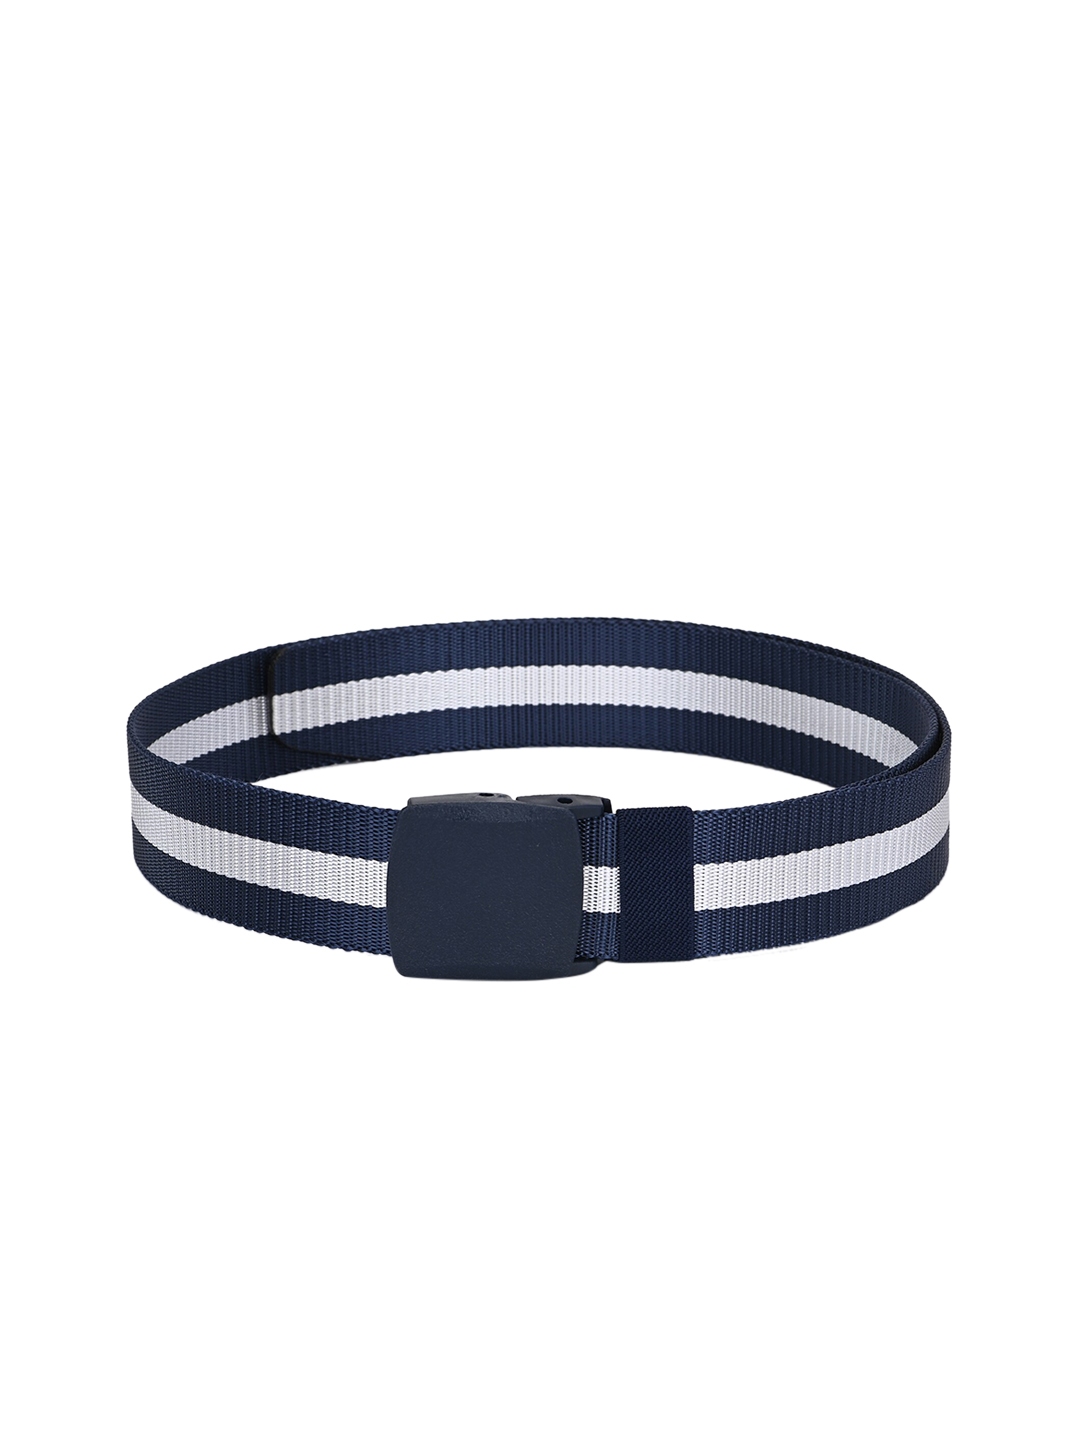 Buy Calvadoss Men Navy Blue & White Striped Belt - Belts for Men ...